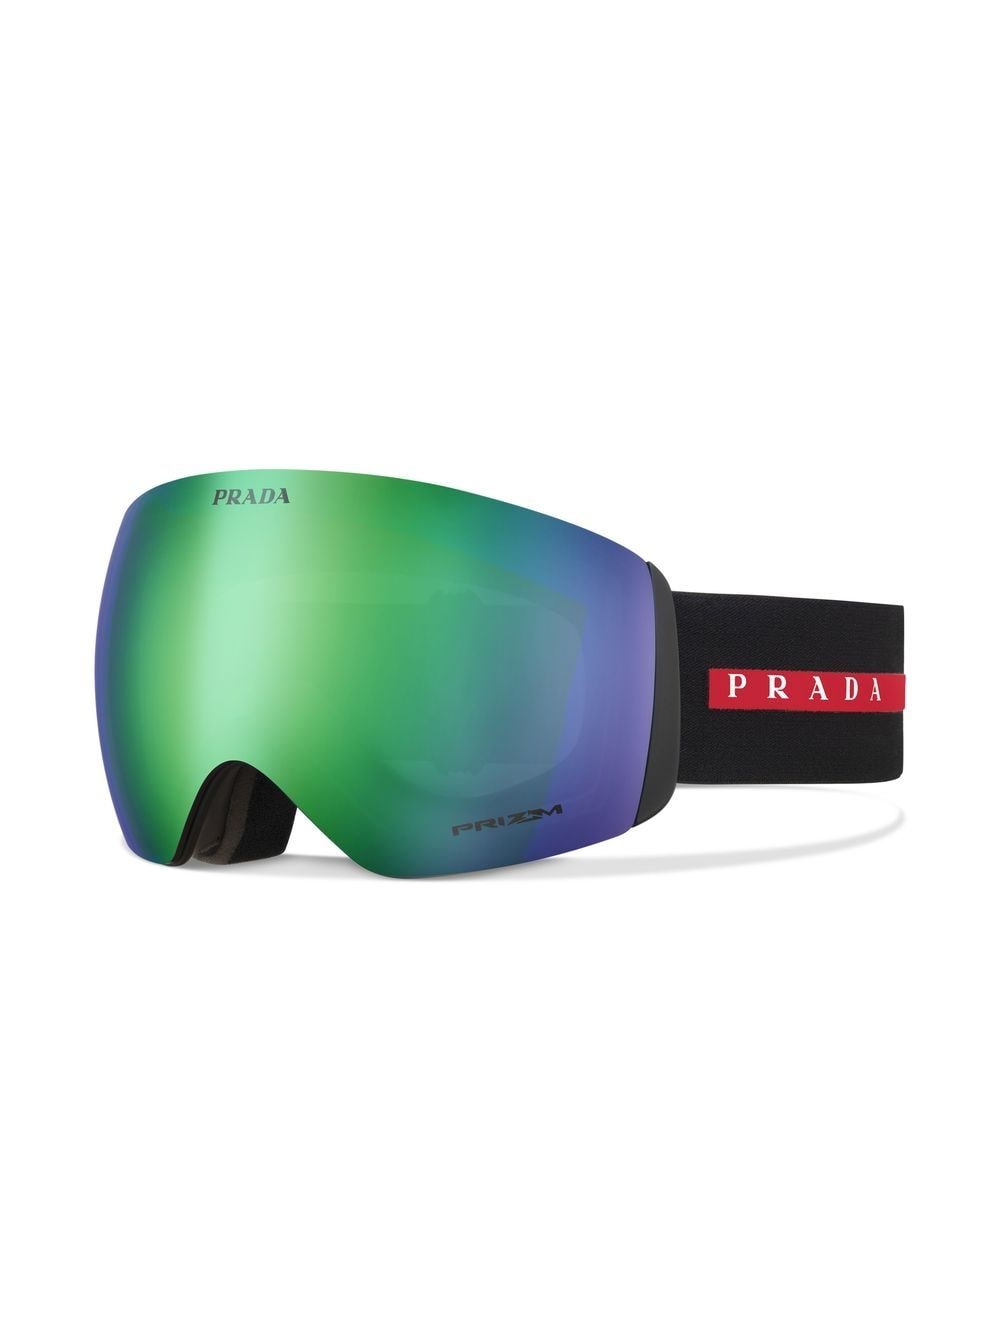 Prada - Prada Linea Rossa Collection - Ski Goggles - Black - Prada  Collection - Prada Eyewear - Avvenice